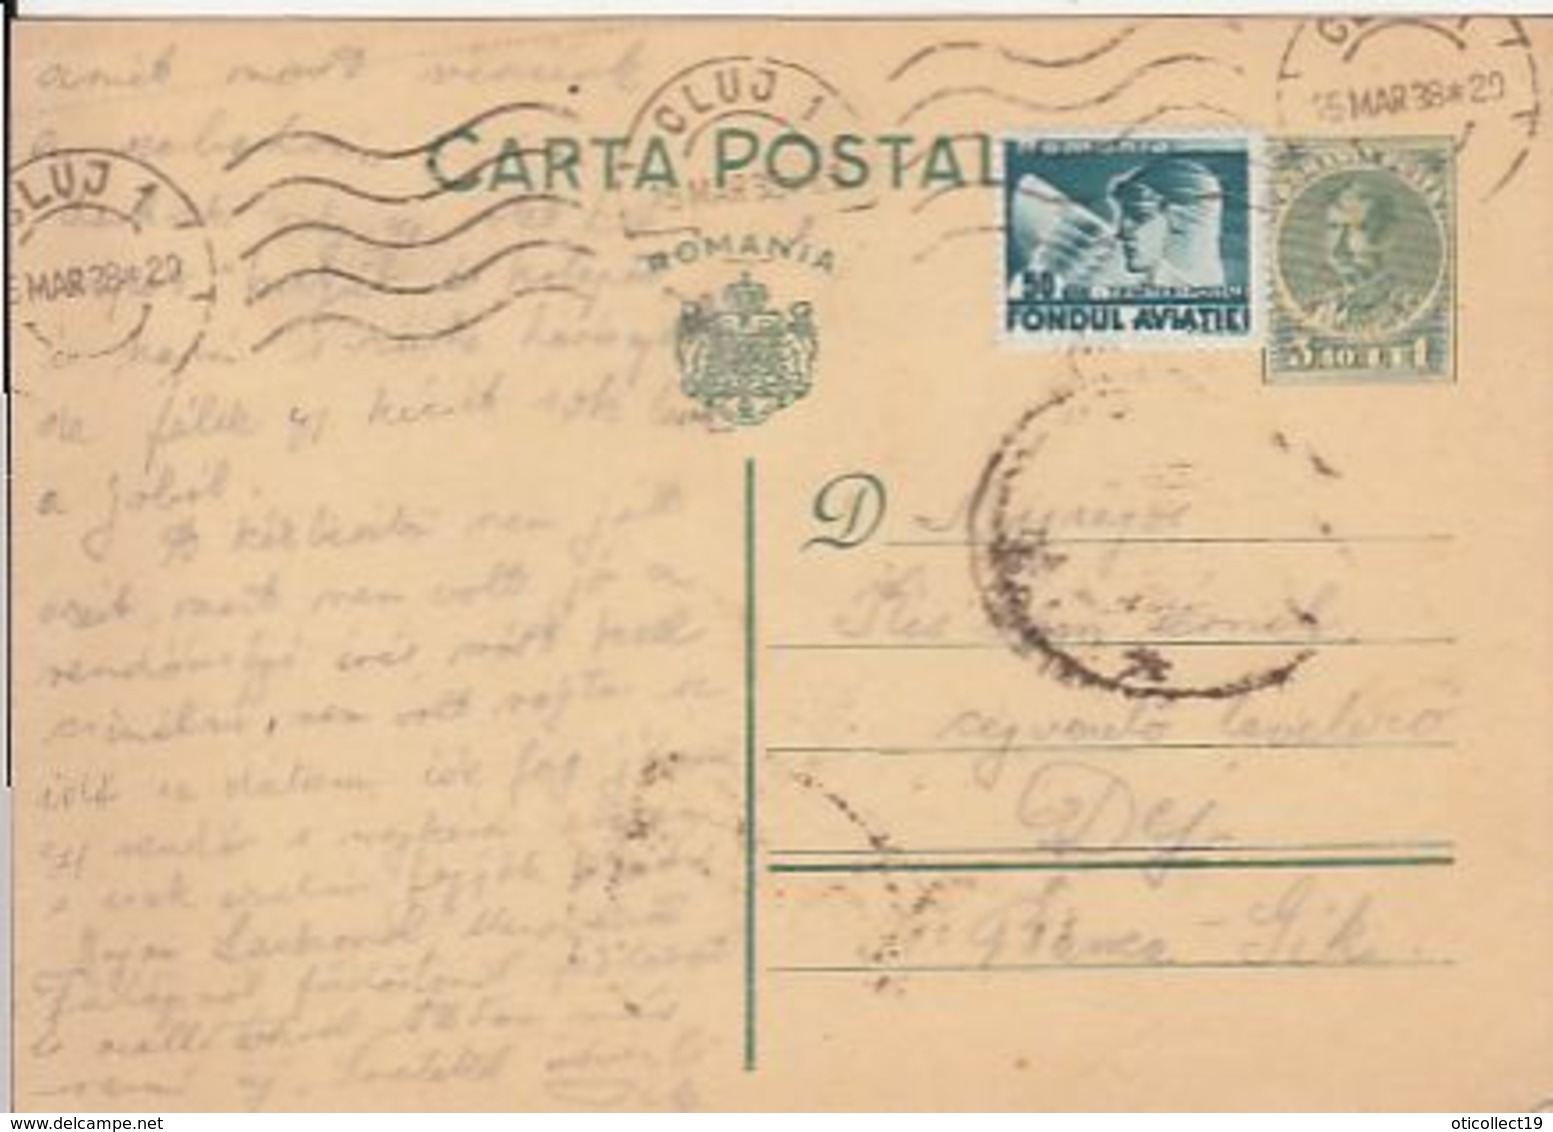 KING CHARLES II, AVIATION STAMP, POSTCARD STATIONERY, 1938, ROMANIA - Storia Postale